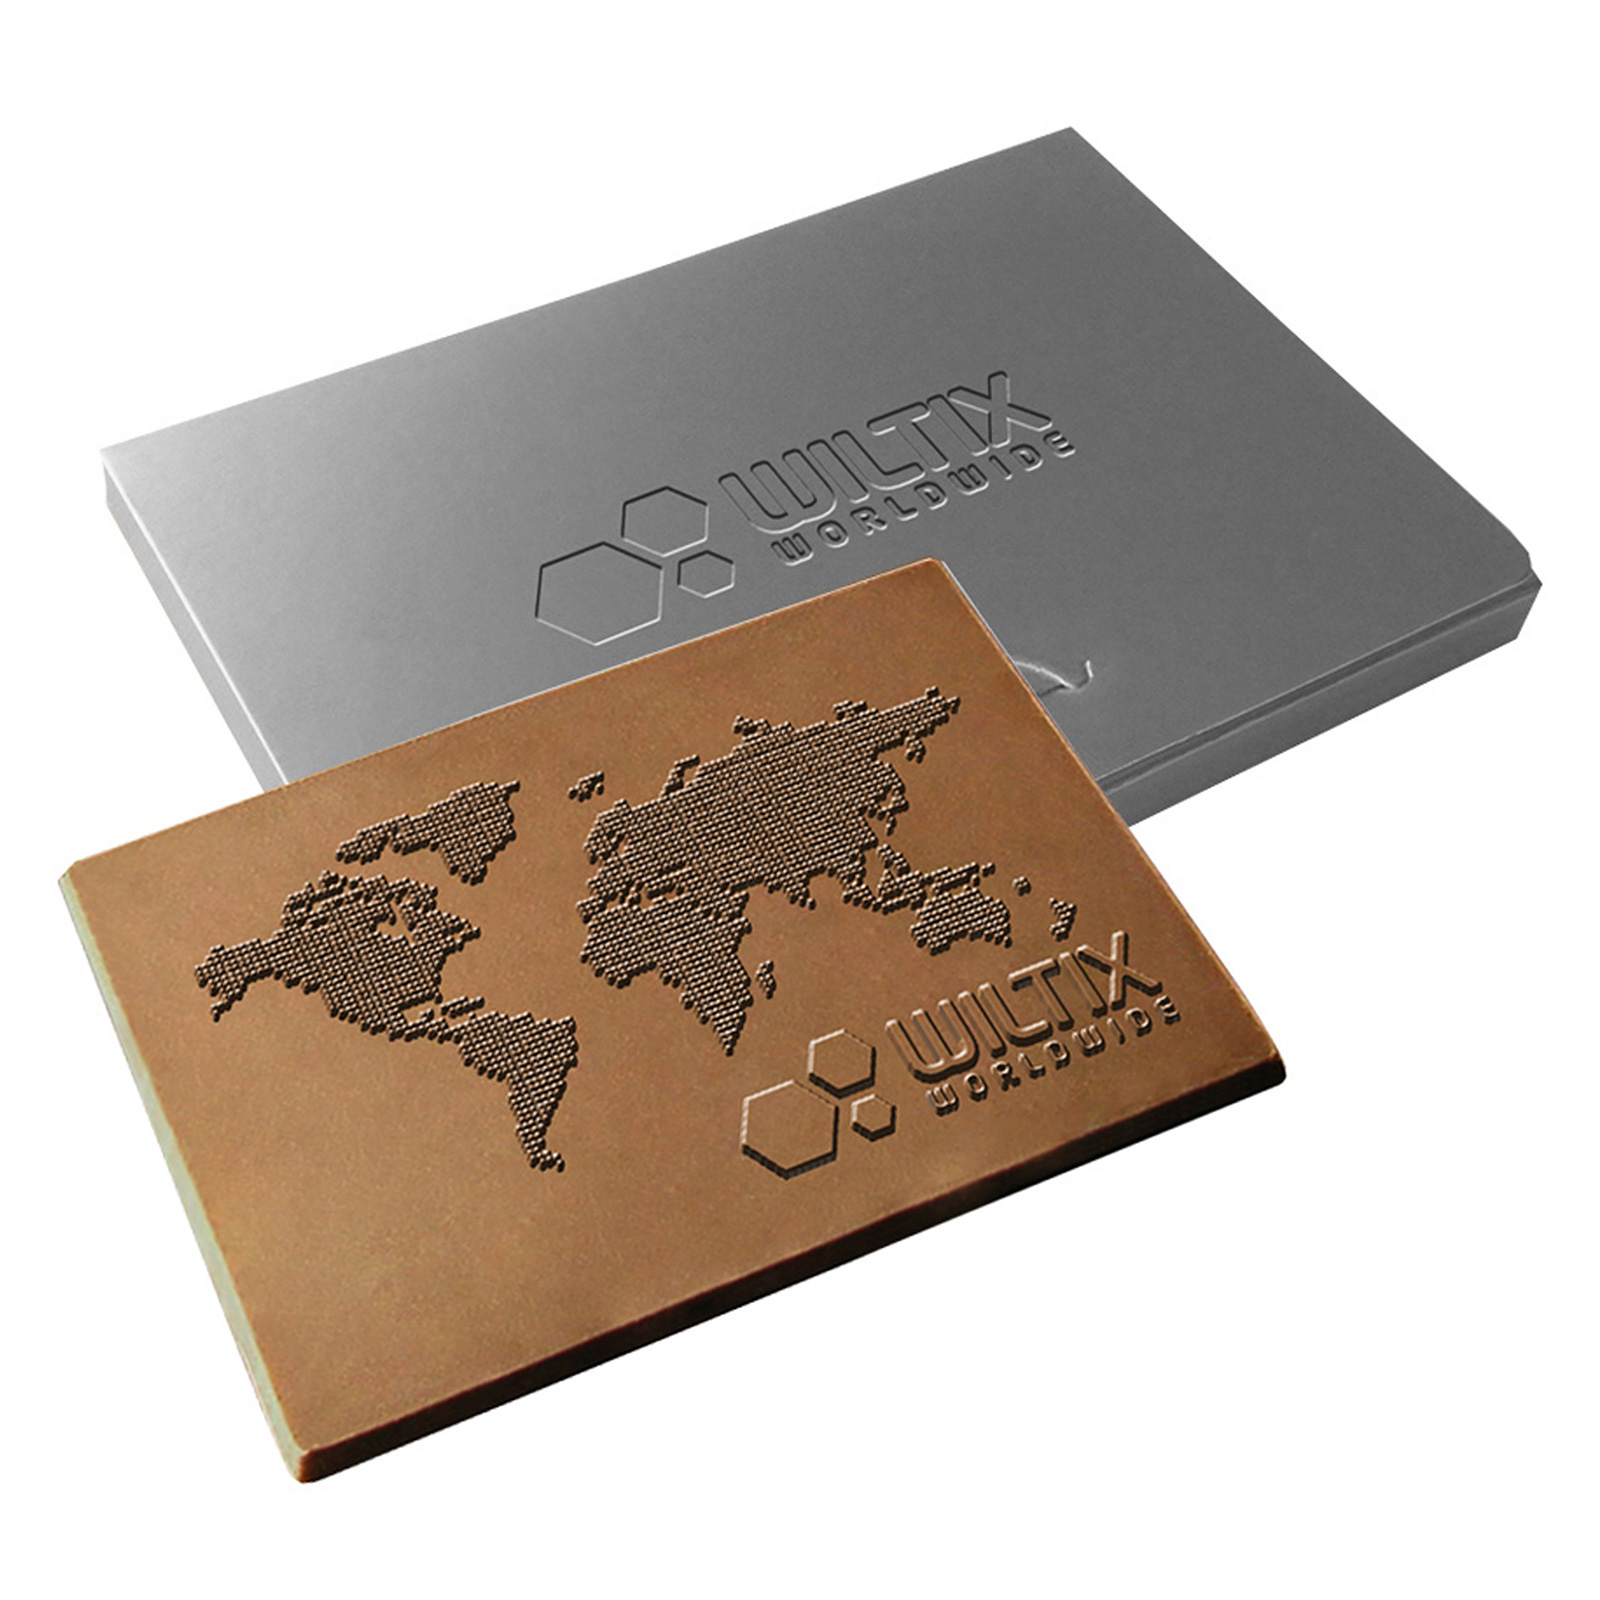 Præget Chokolade Kreditkort - Snejbjerg